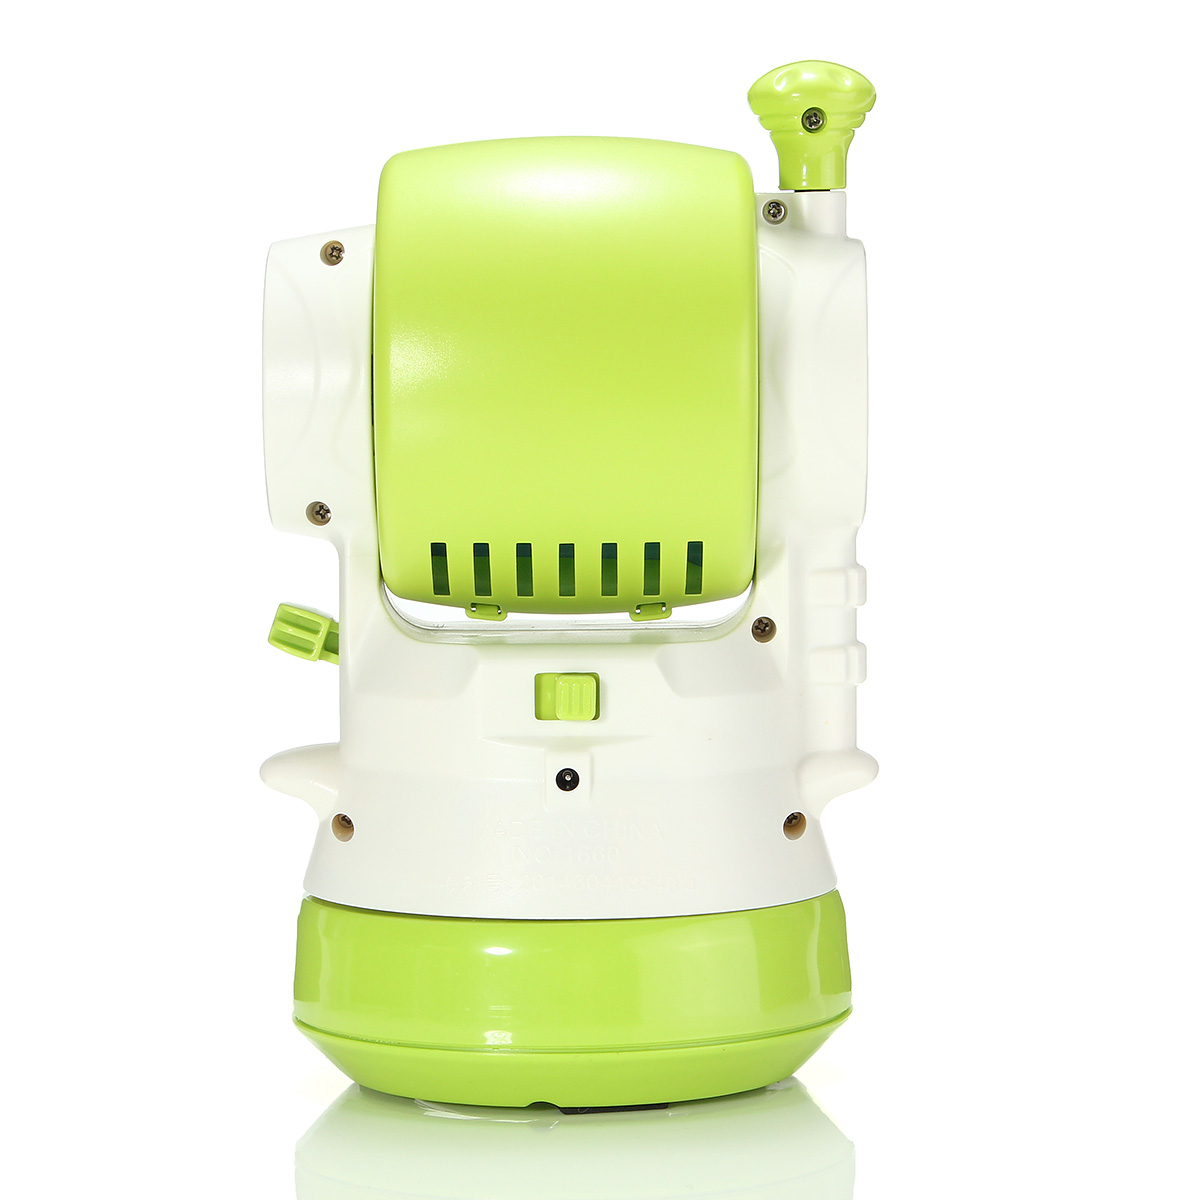 Water-Fog-Spray-Air-Mini-Fan-Aromatherapy-Humidifier-Mist-USB-Charging-1422888-8